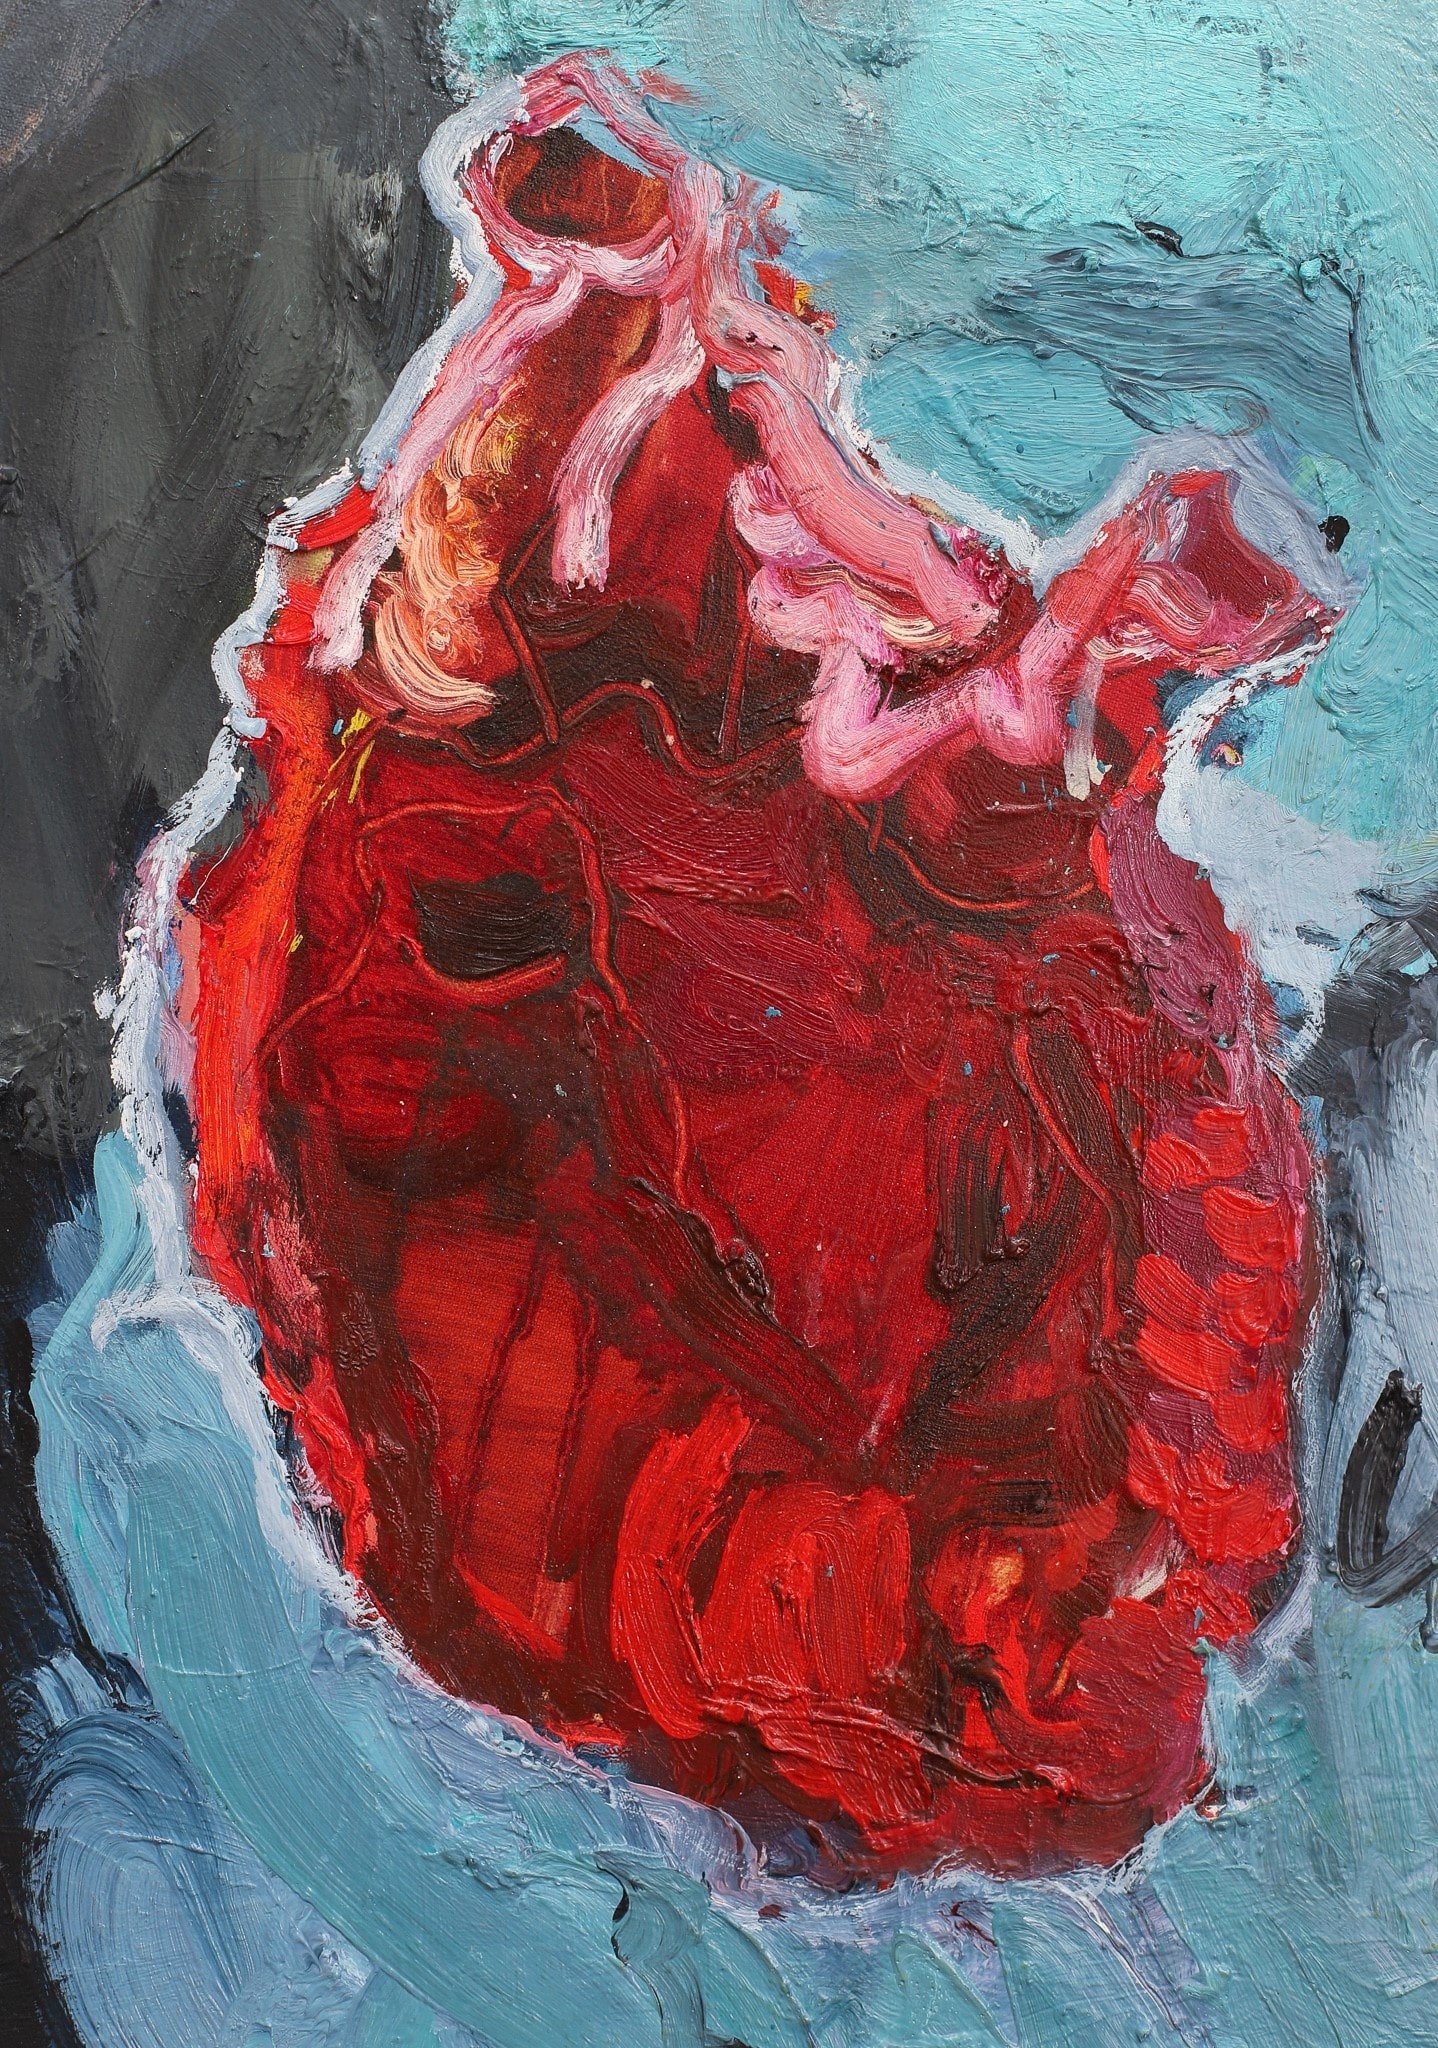 heartbeat-2-heart-painting-oil-paintings-min.jpg